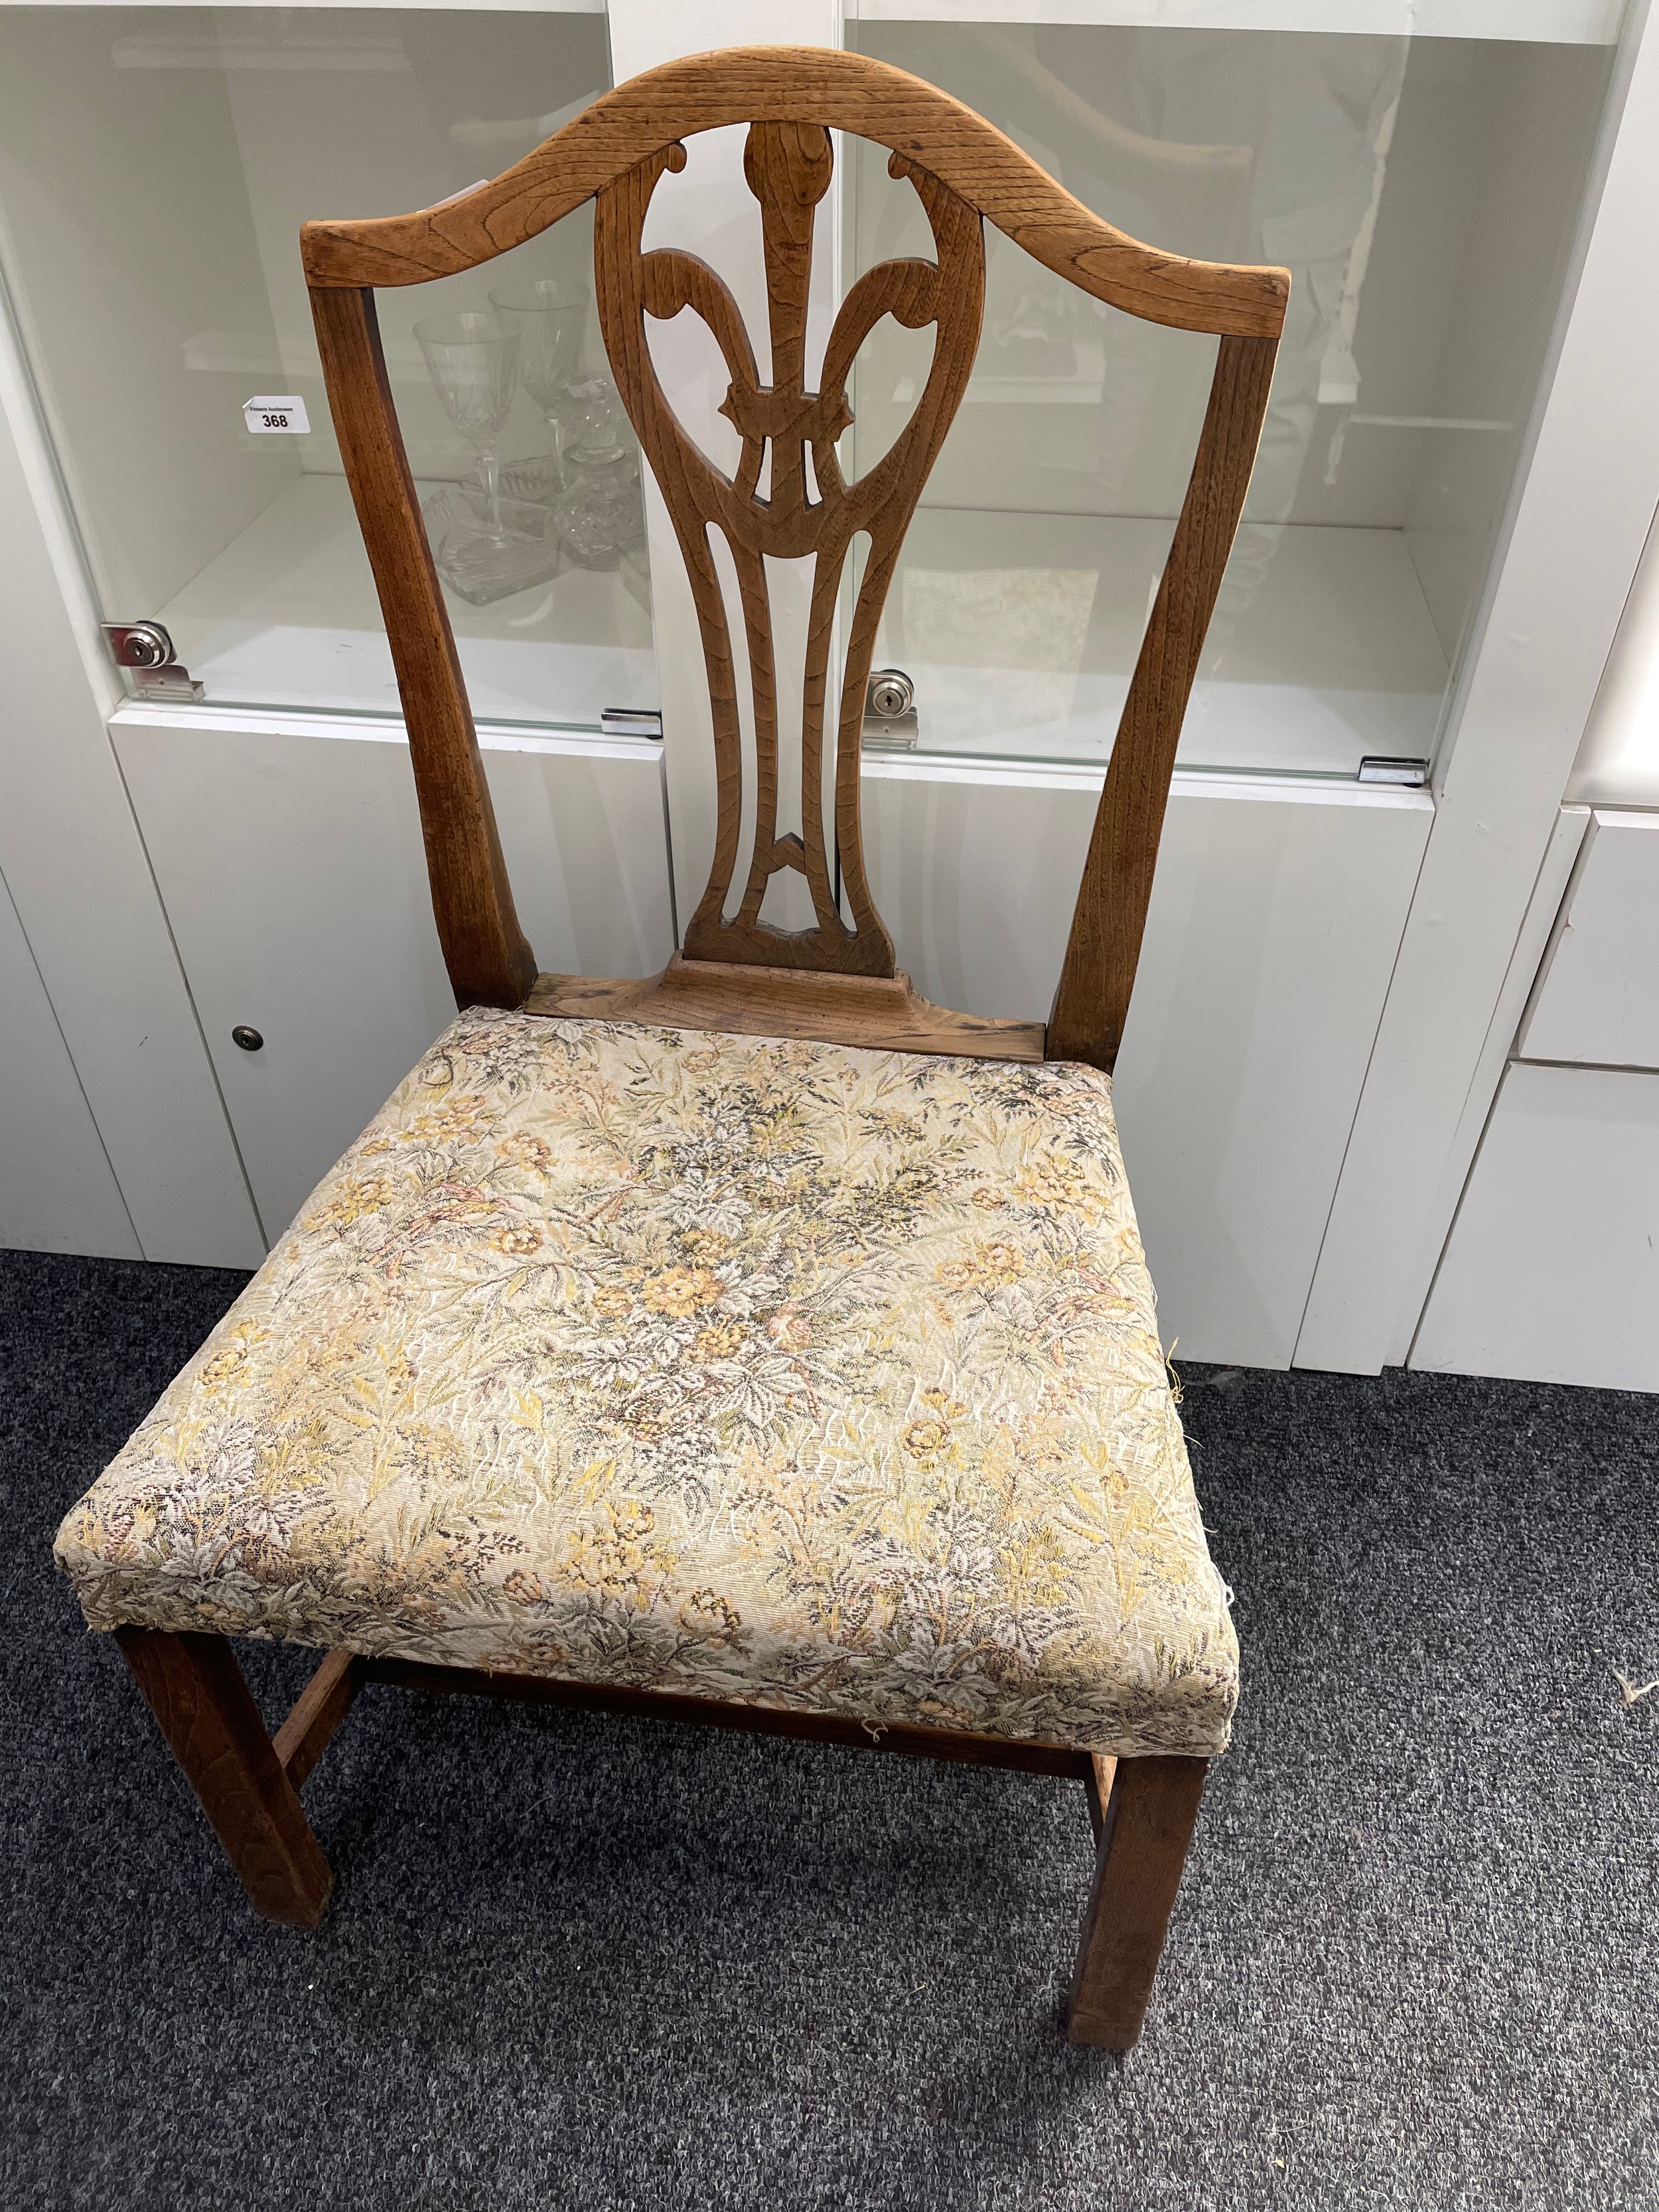 Oak chair - Image 2 of 3